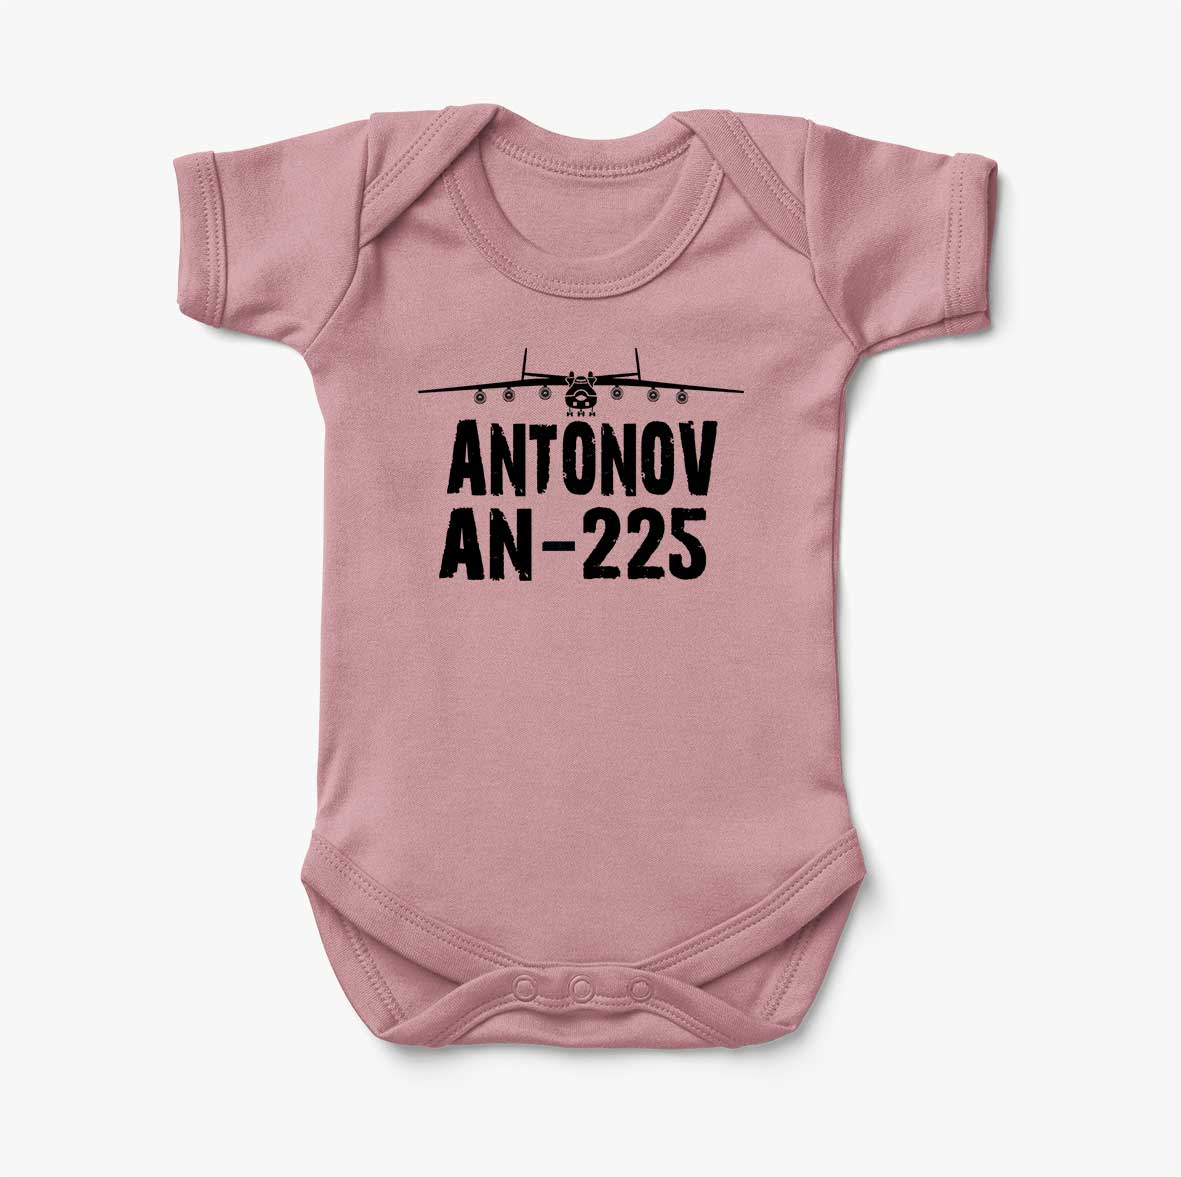 Antonov AN-225 & Plane Designed Baby Bodysuits